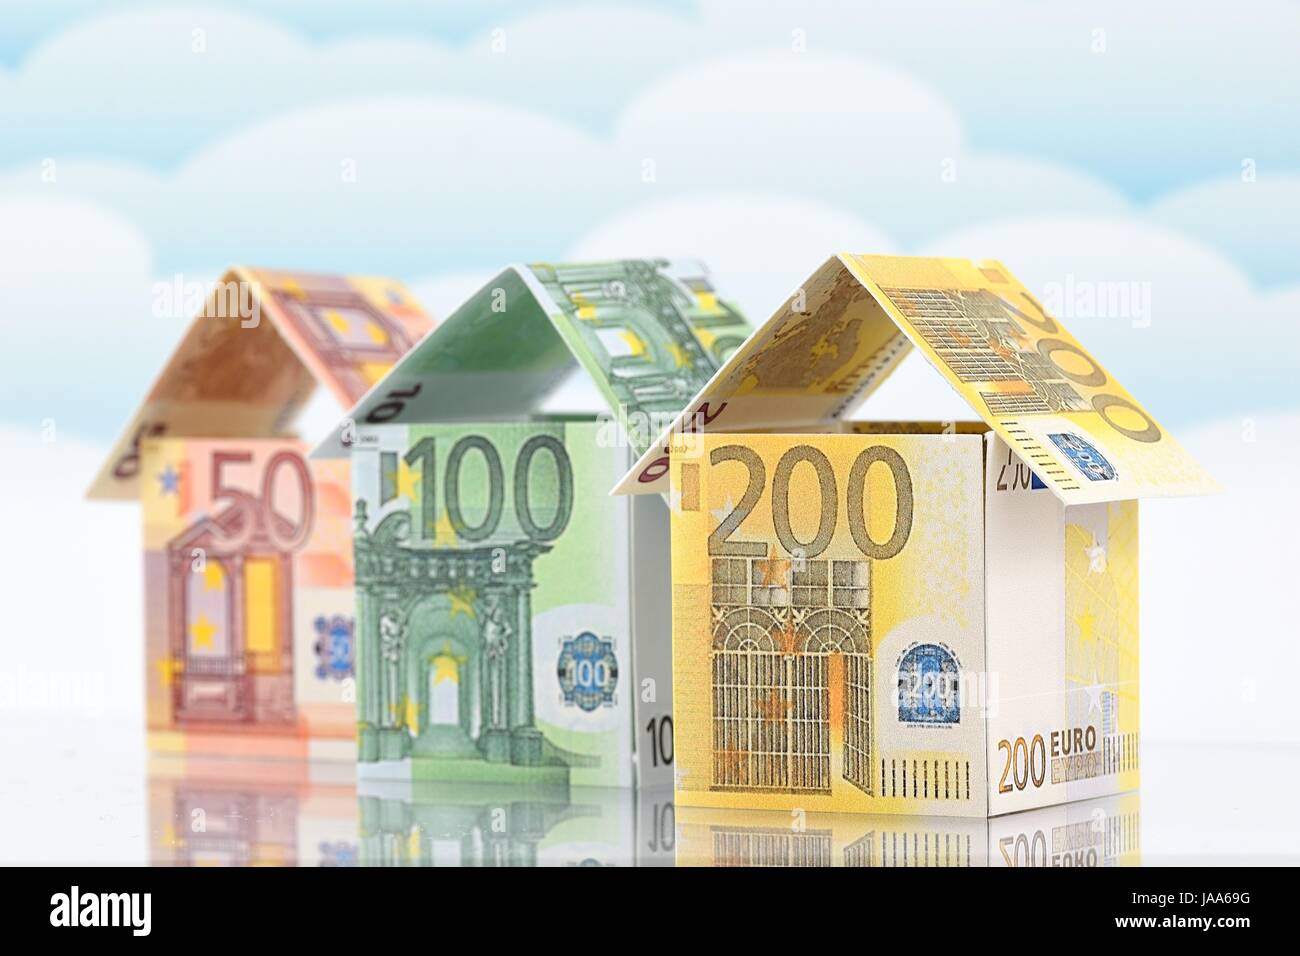 Housing market, a prosperous future. Material: banknotes (euros). Form: houses Stock Photo